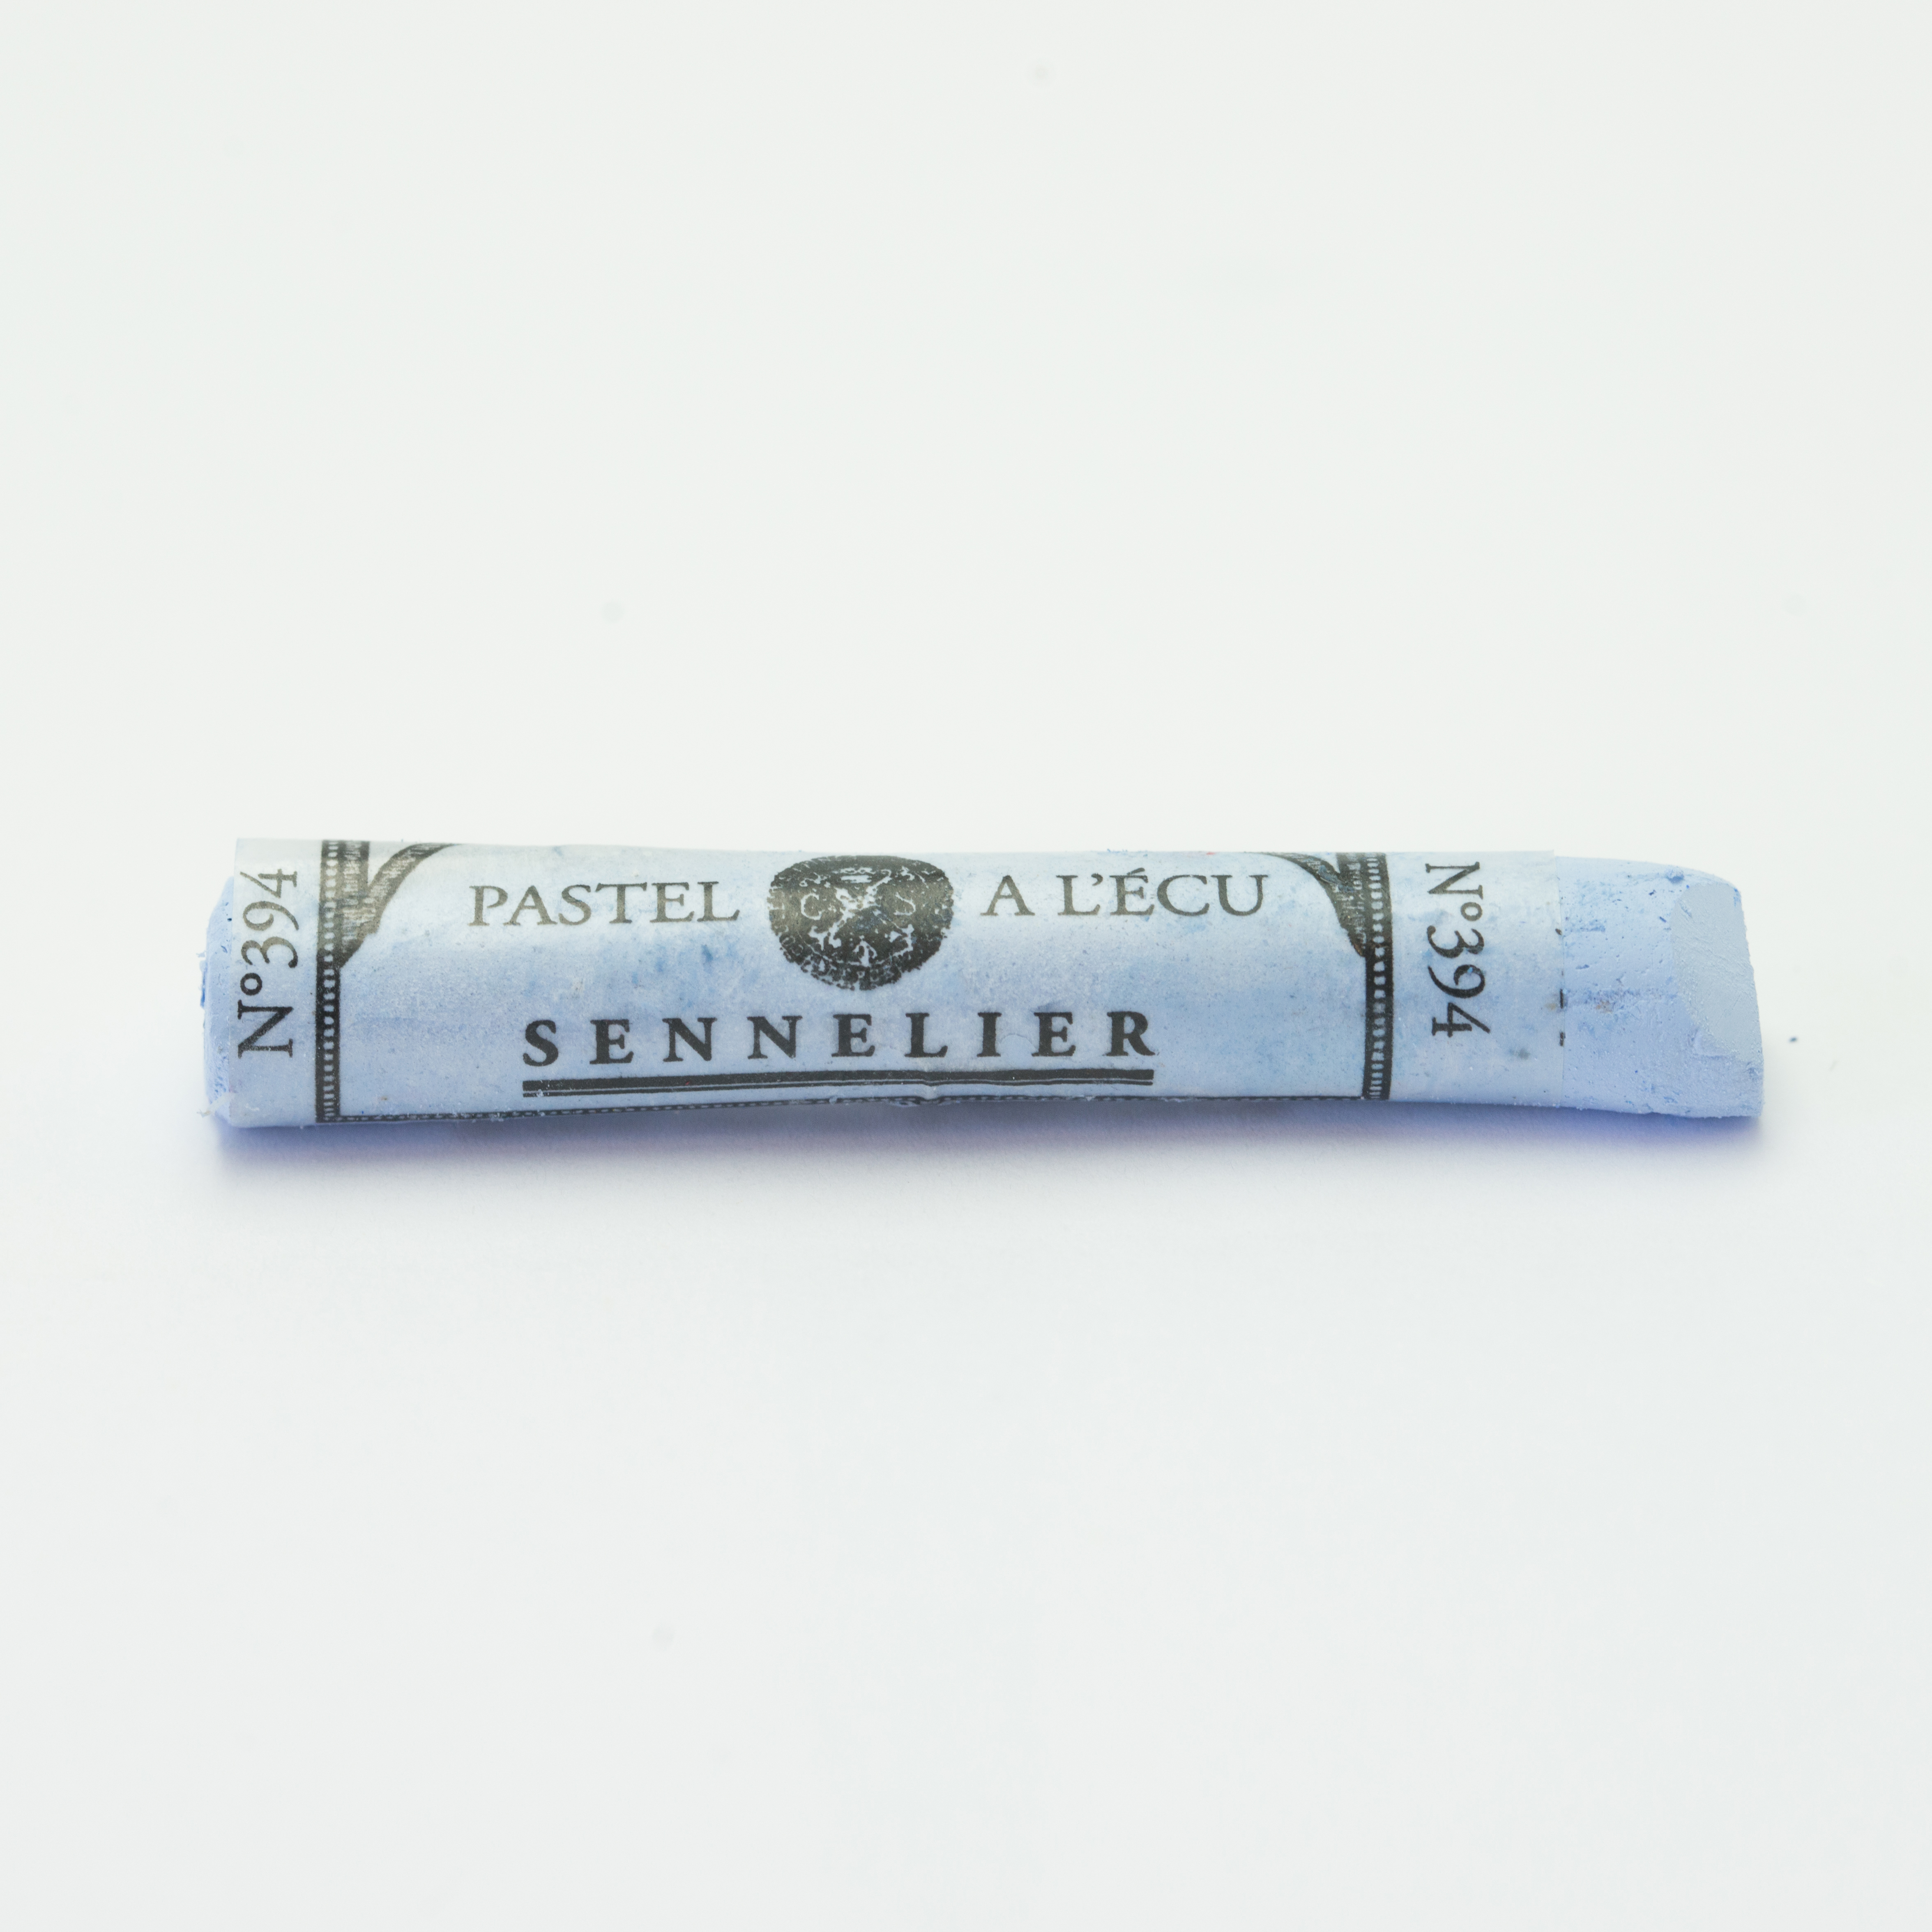 Sennelier Extra Soft Pastels - Ultramarine Blue 394